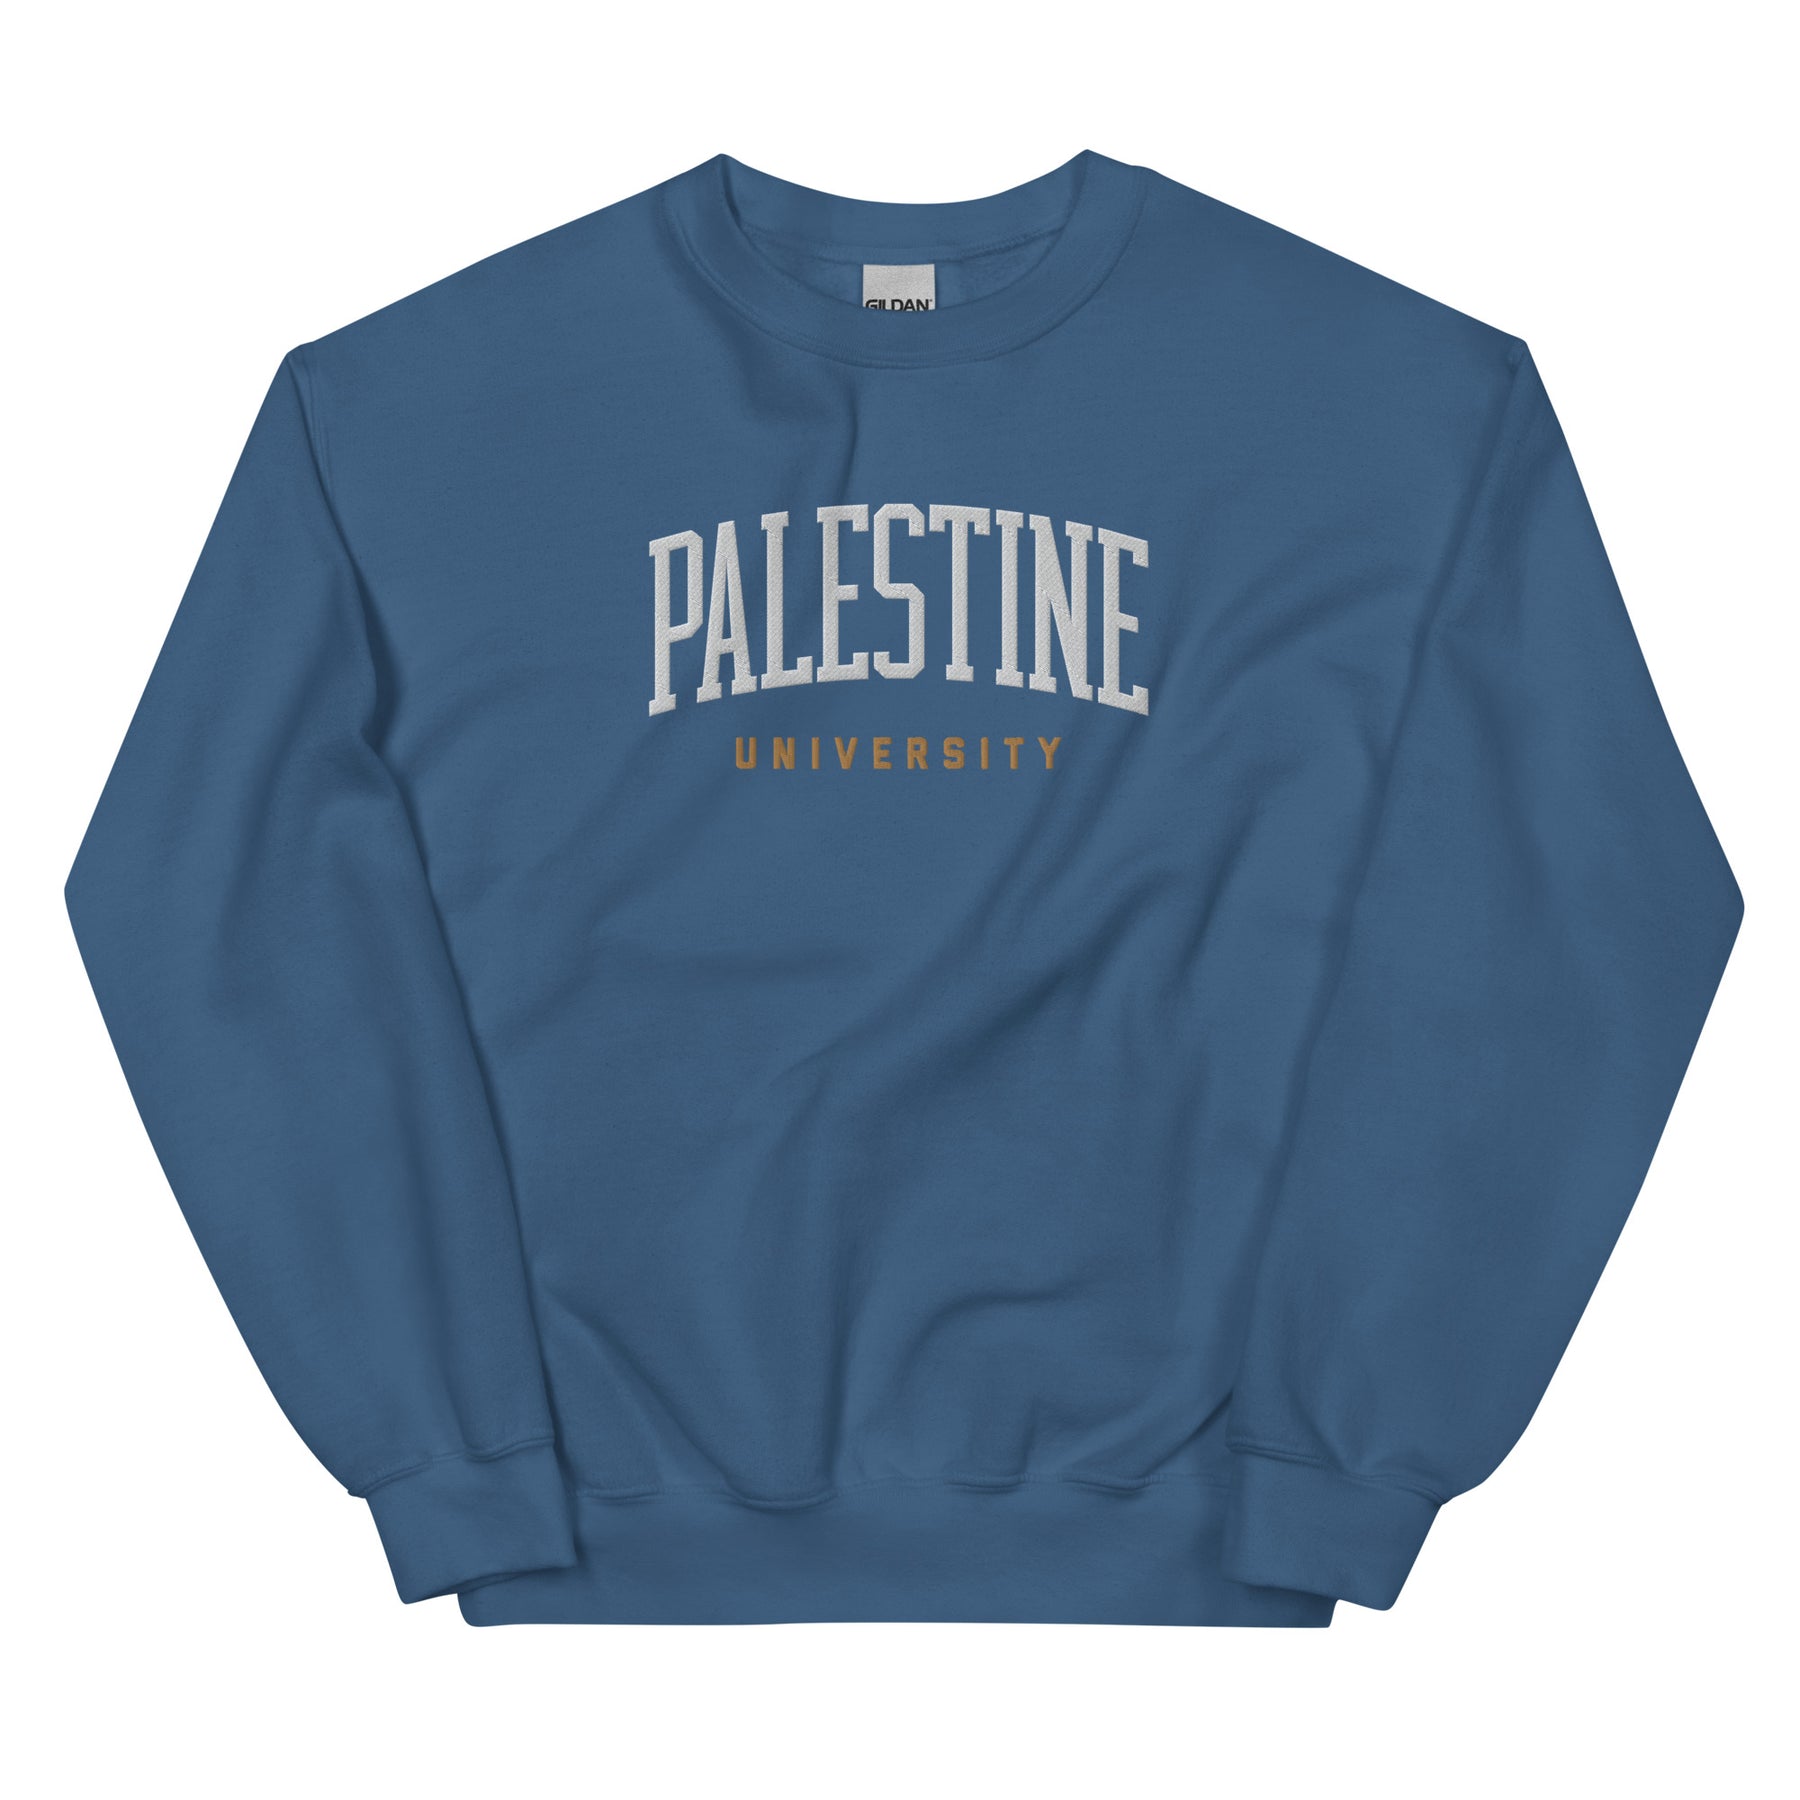 Palestine university sweatshirt in blue by Dar Collective